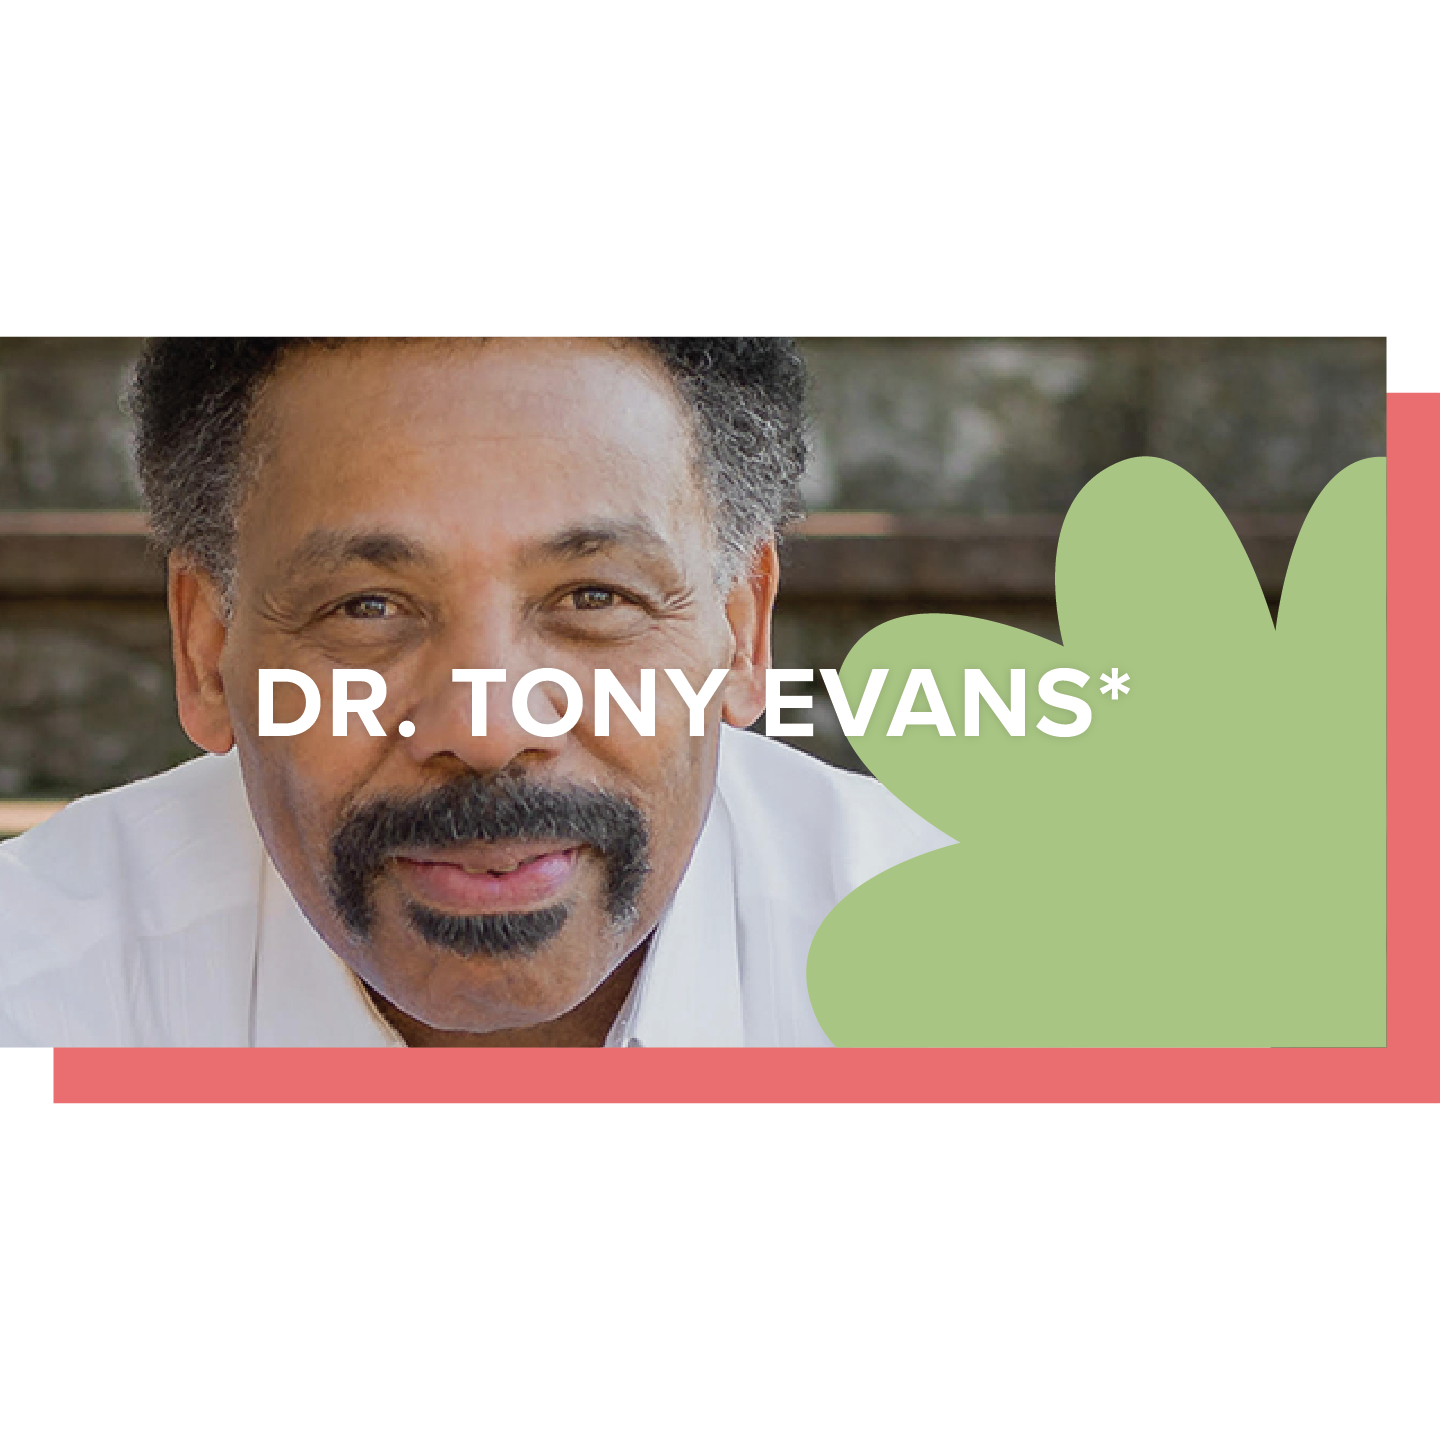 Dr Tony Evans*